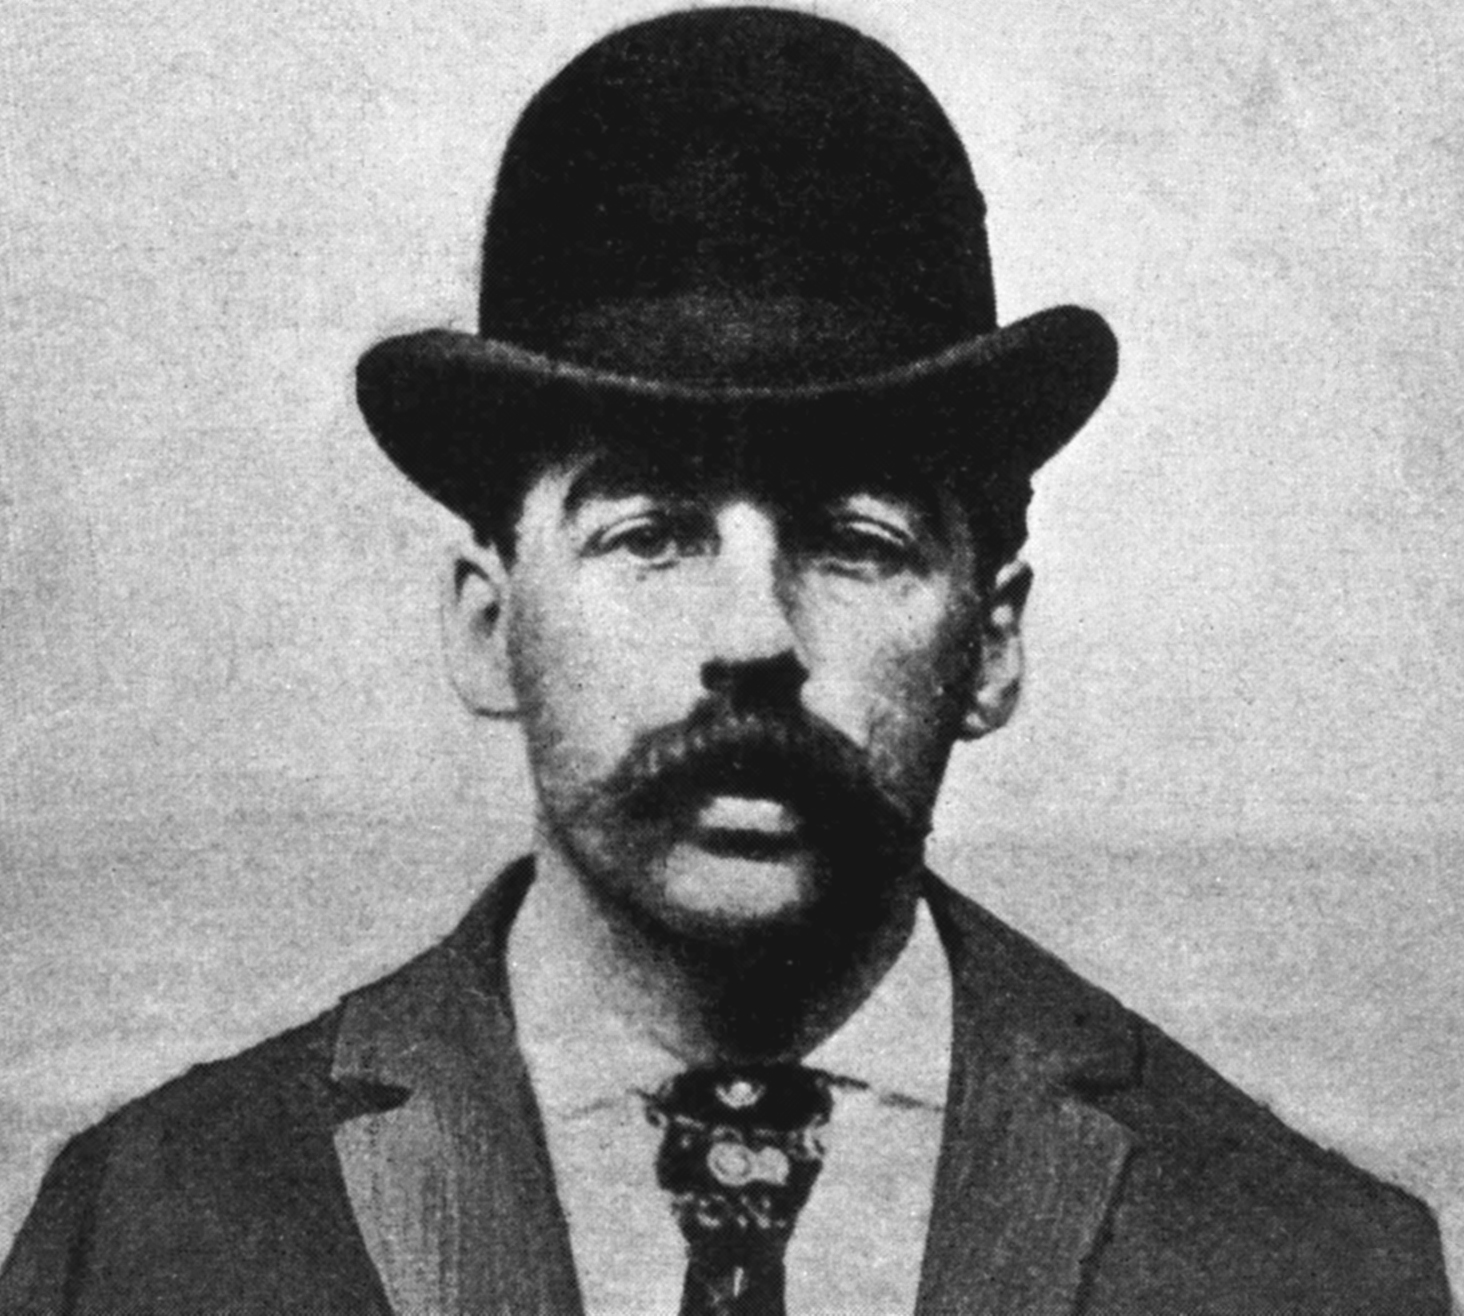 H. H. Holmes Murder Cases Explored